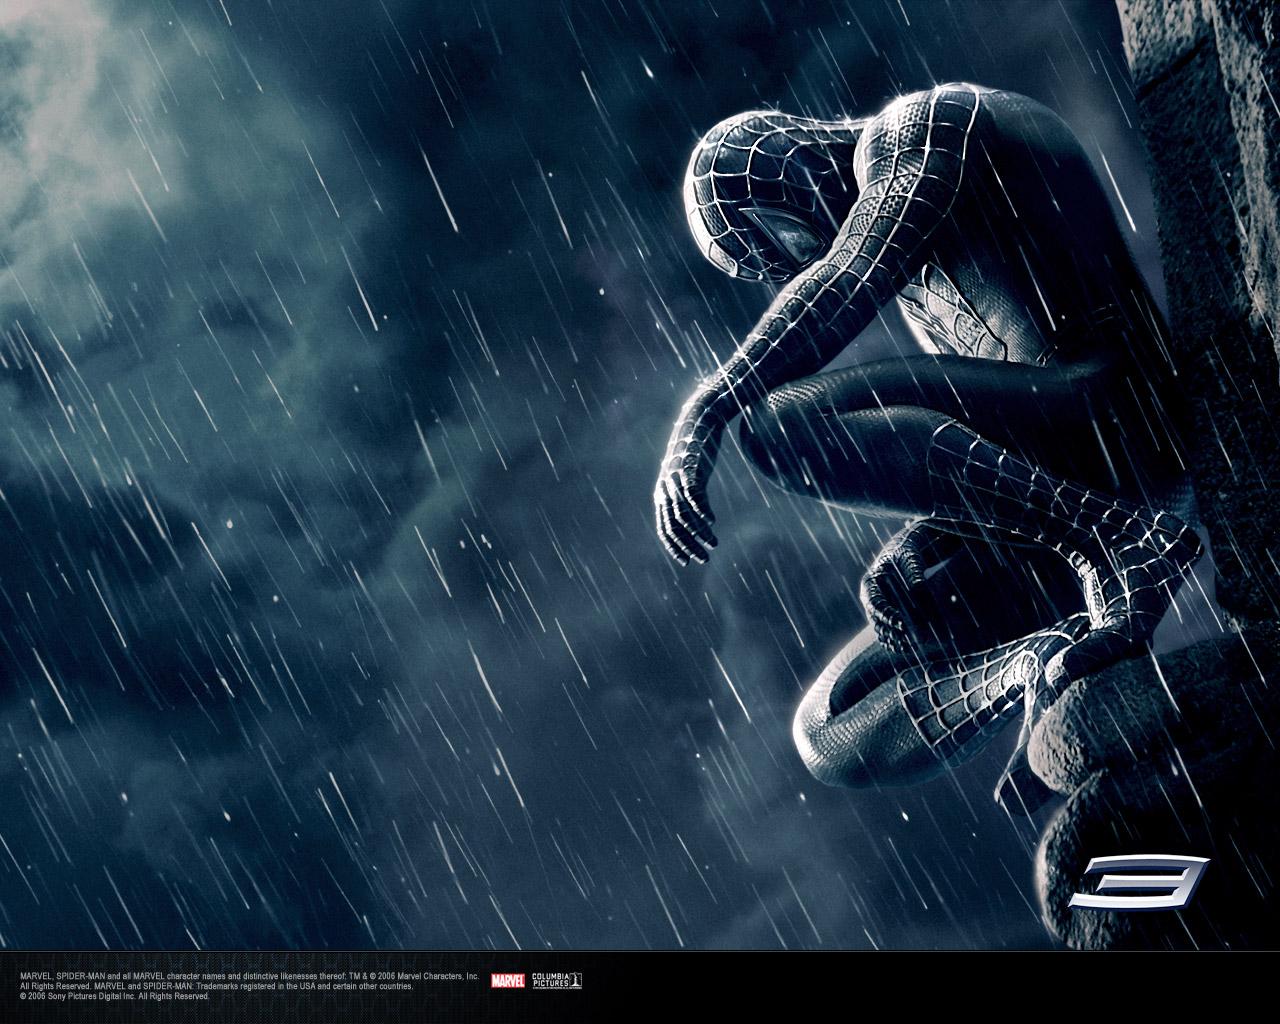 Free HD Wallpaper: Spiderman movie wallpaper Free